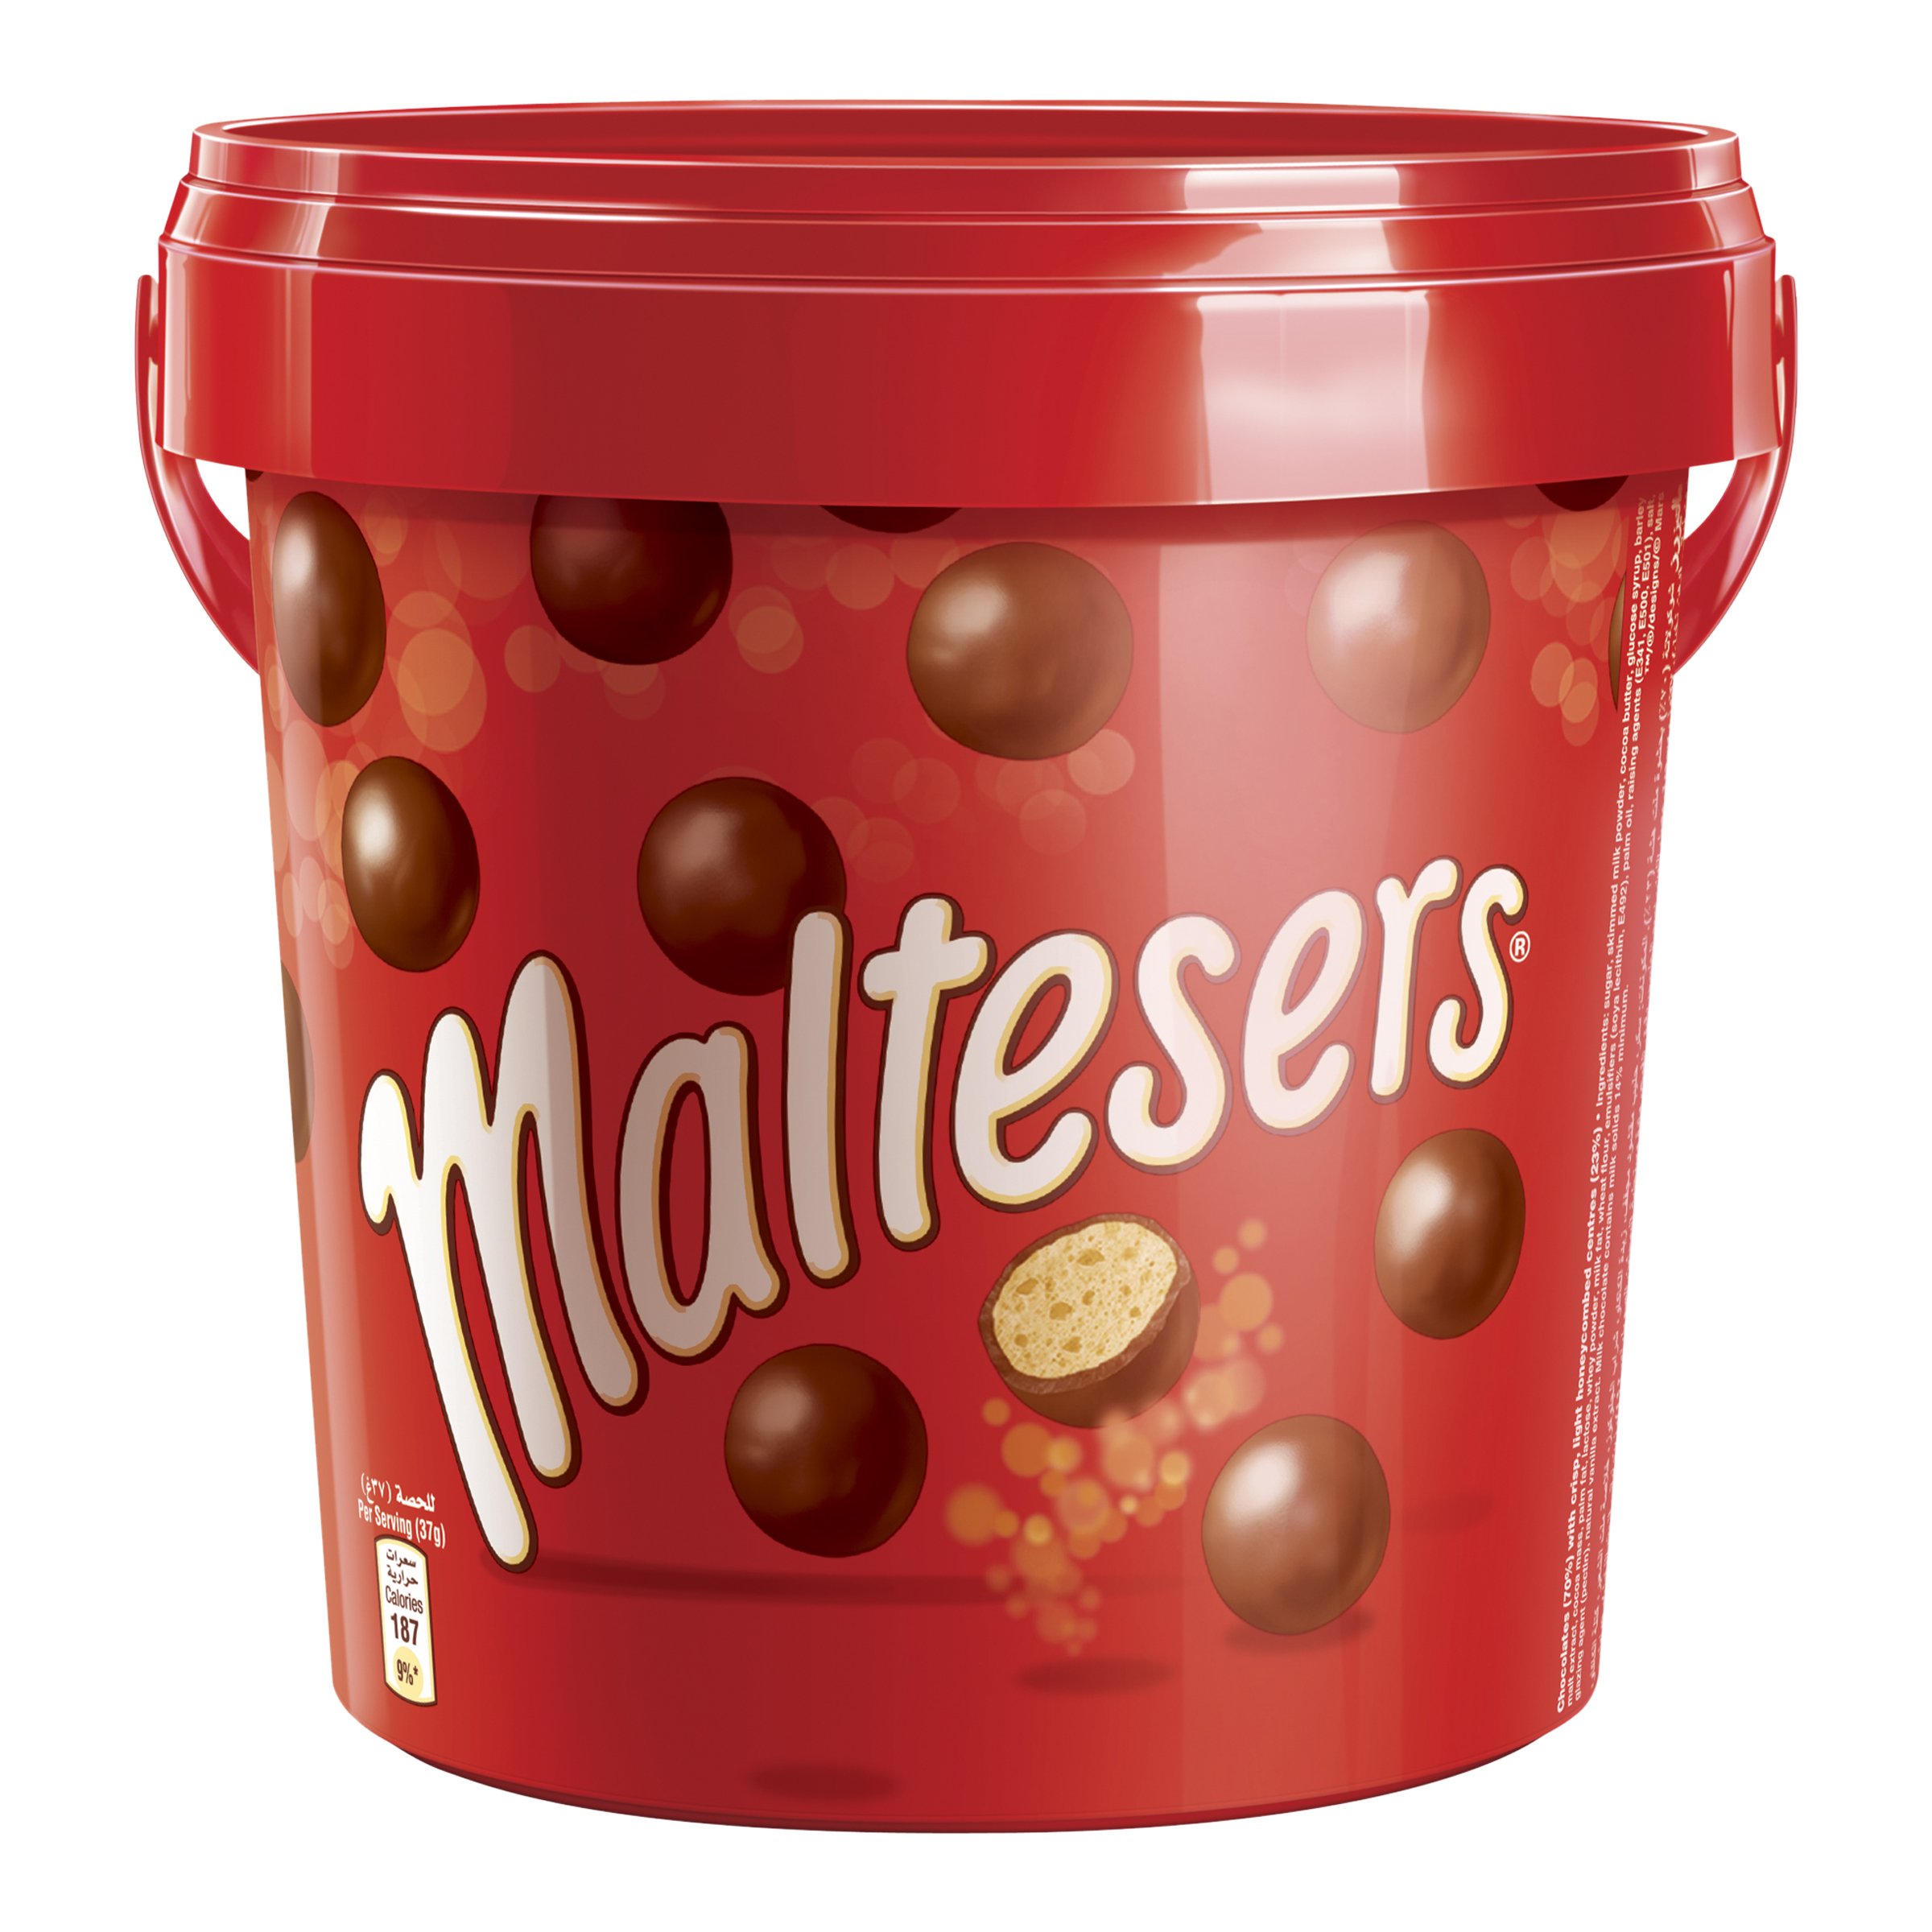 Шарики криспи. Maltesers шоколадные шарики 37 гр. Конфеты шоколадные шарики Мальтизерс. Maltesers драже шоколадные шарики. Конфеты Mars Maltesers.